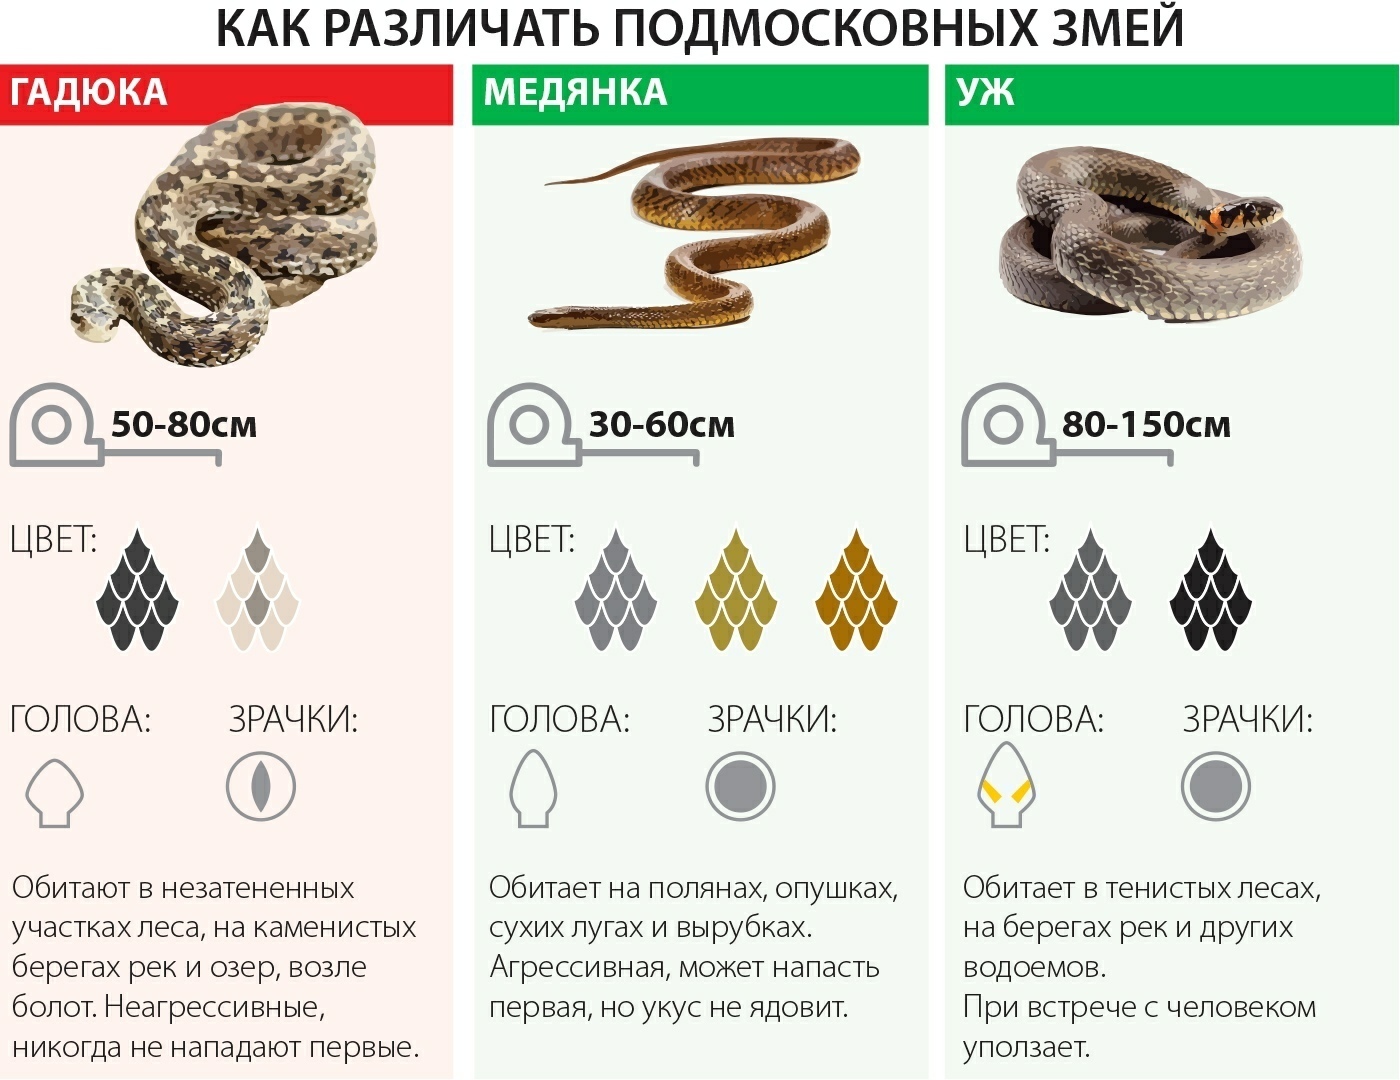 How to distinguish snakes near Moscow - Snake, Memo, Already, Black Viper, Verdigris